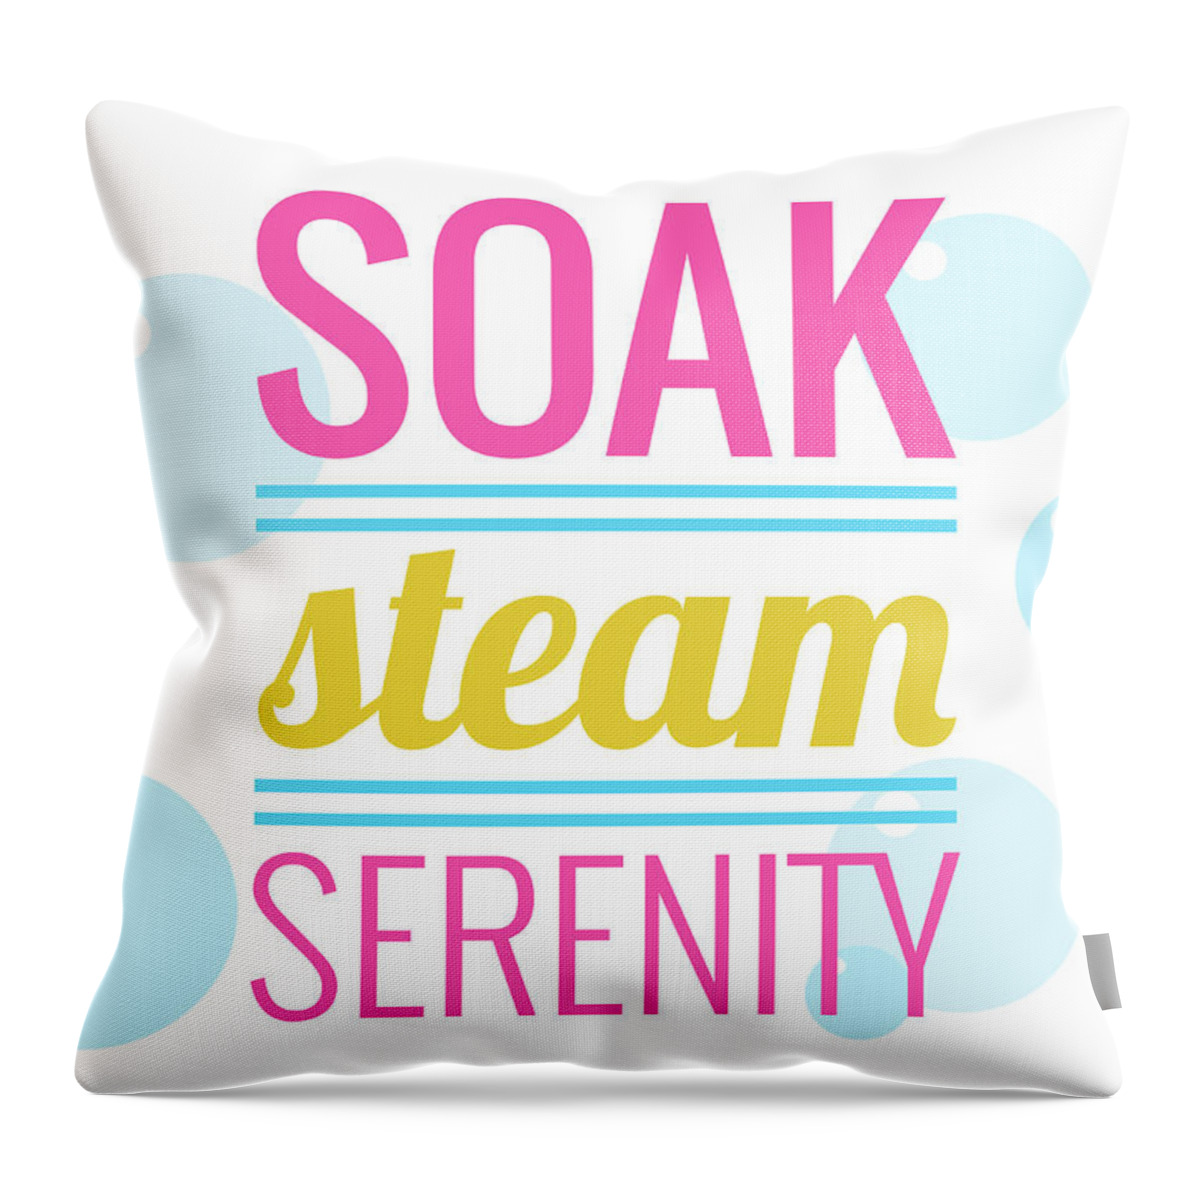 Soak Throw Pillow featuring the digital art Soak, Steam, Serenity by Sd Graphics Studio